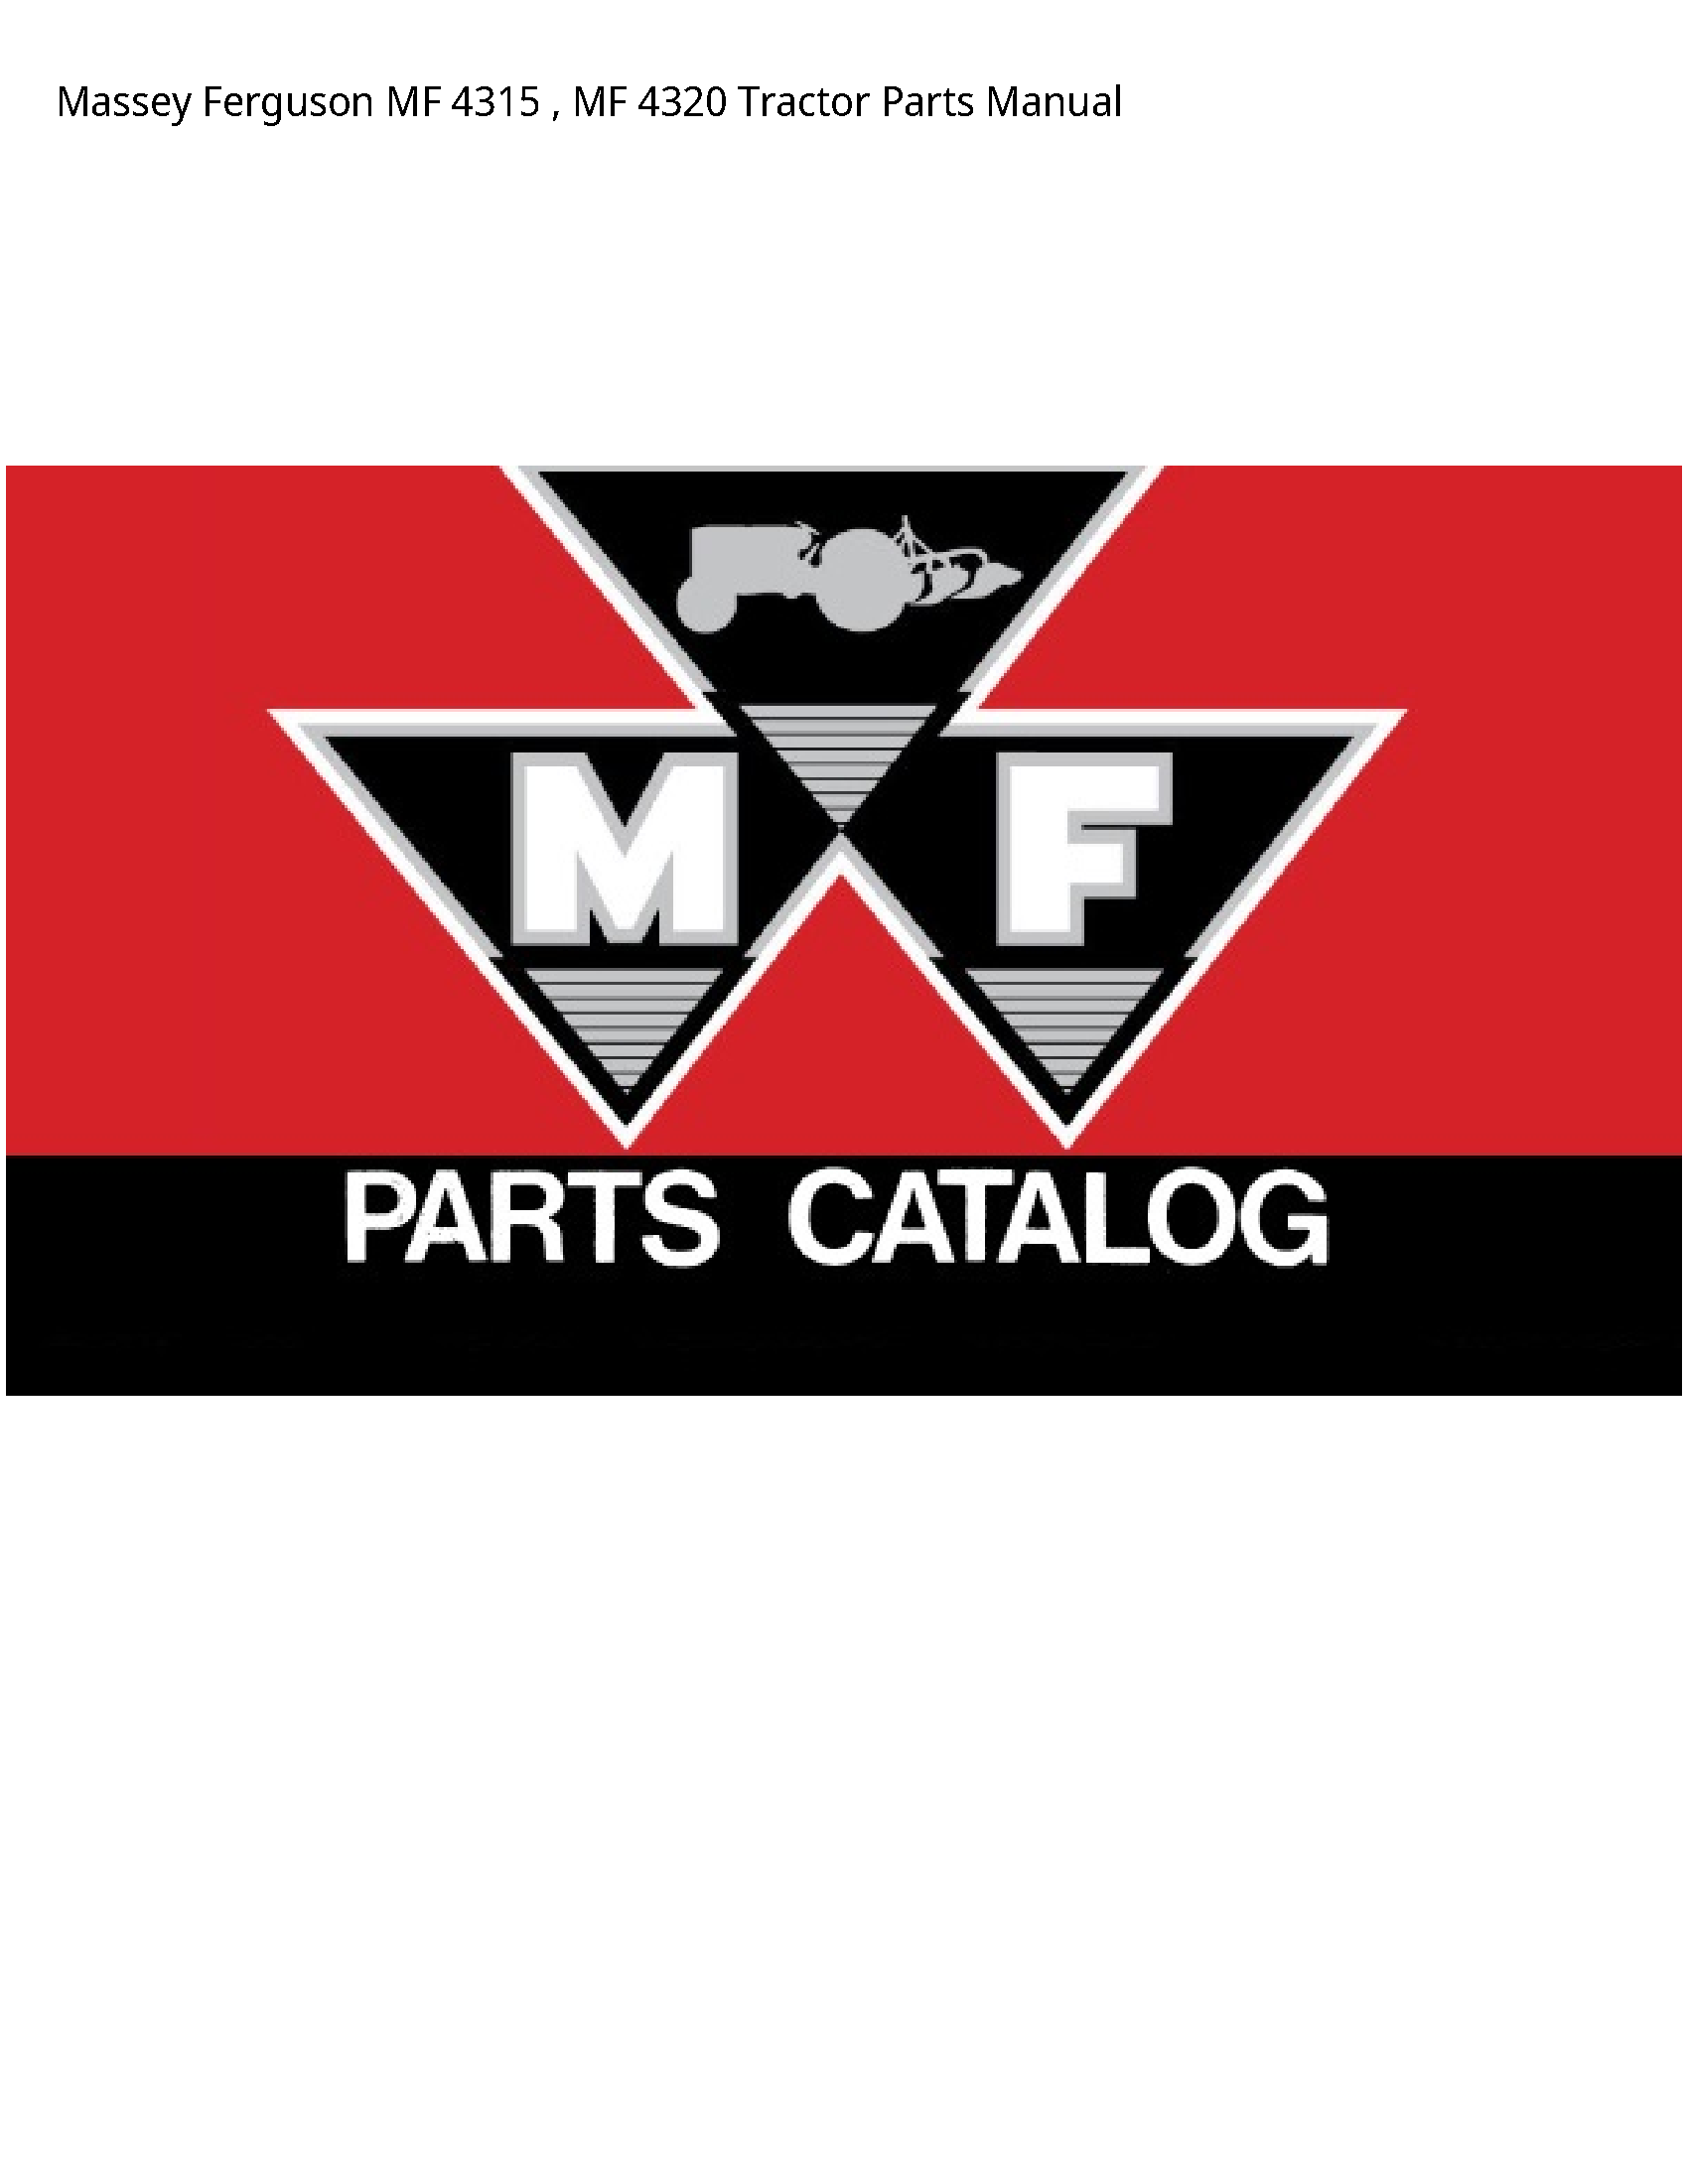 Massey Ferguson 4315 MF MF Tractor Parts manual